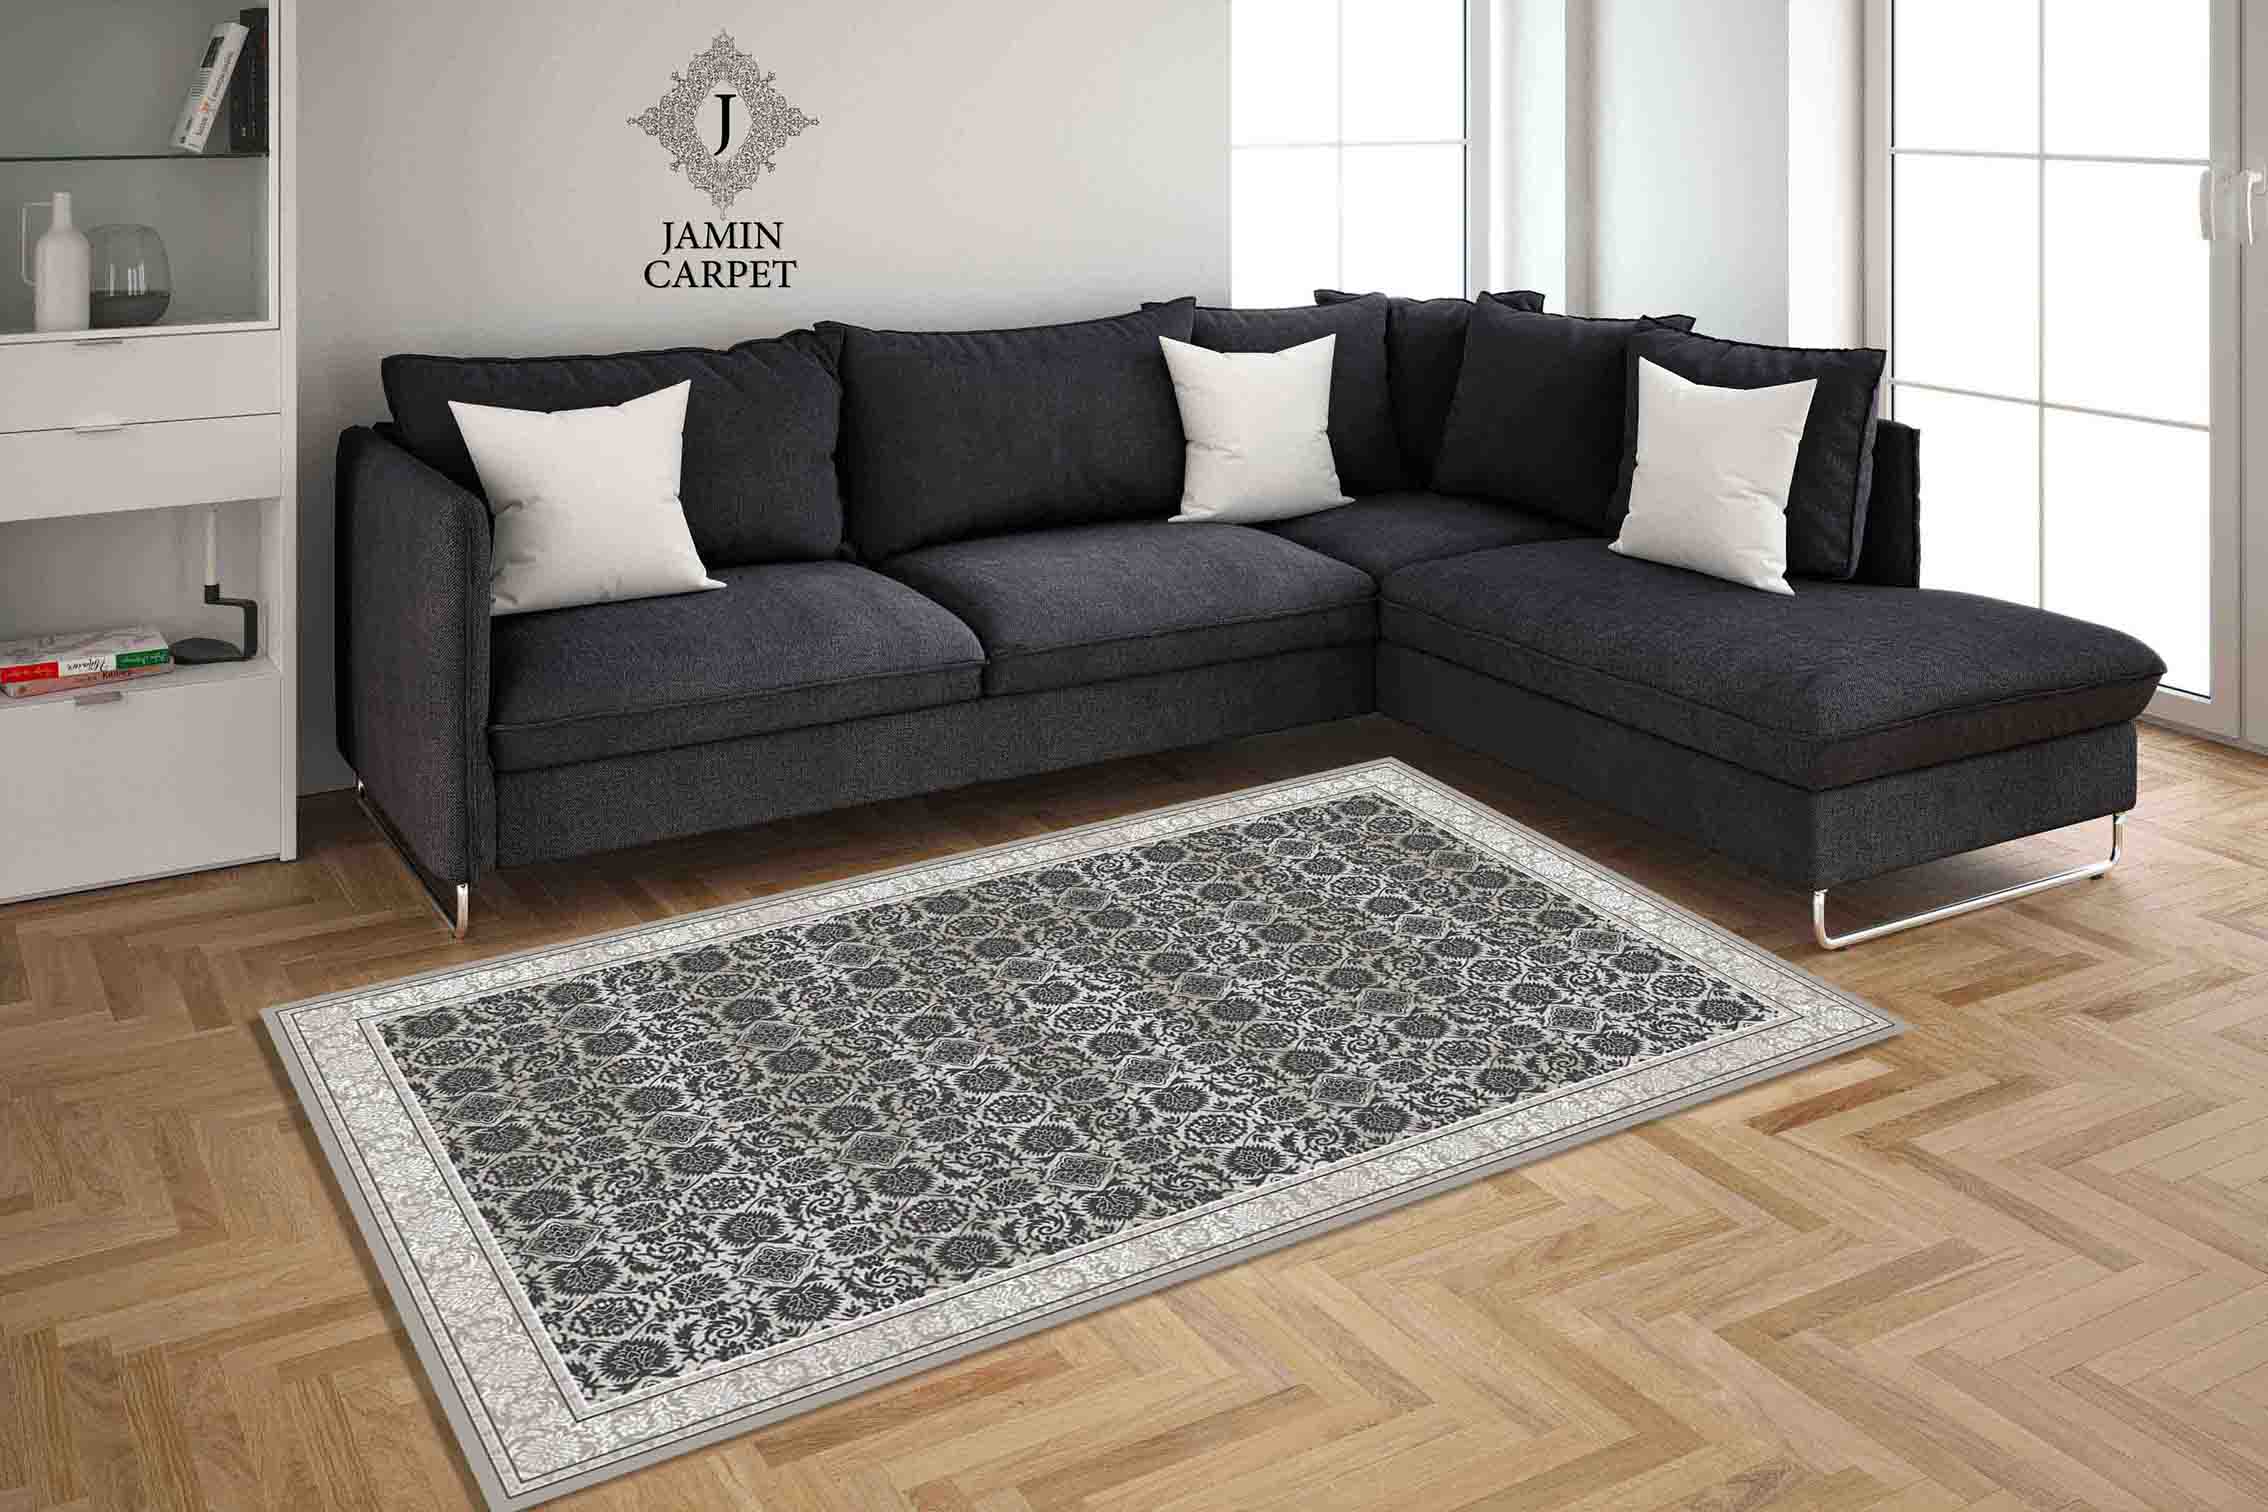 Fantasy carpet, code 248, comb 400, density 1800, all acrylic